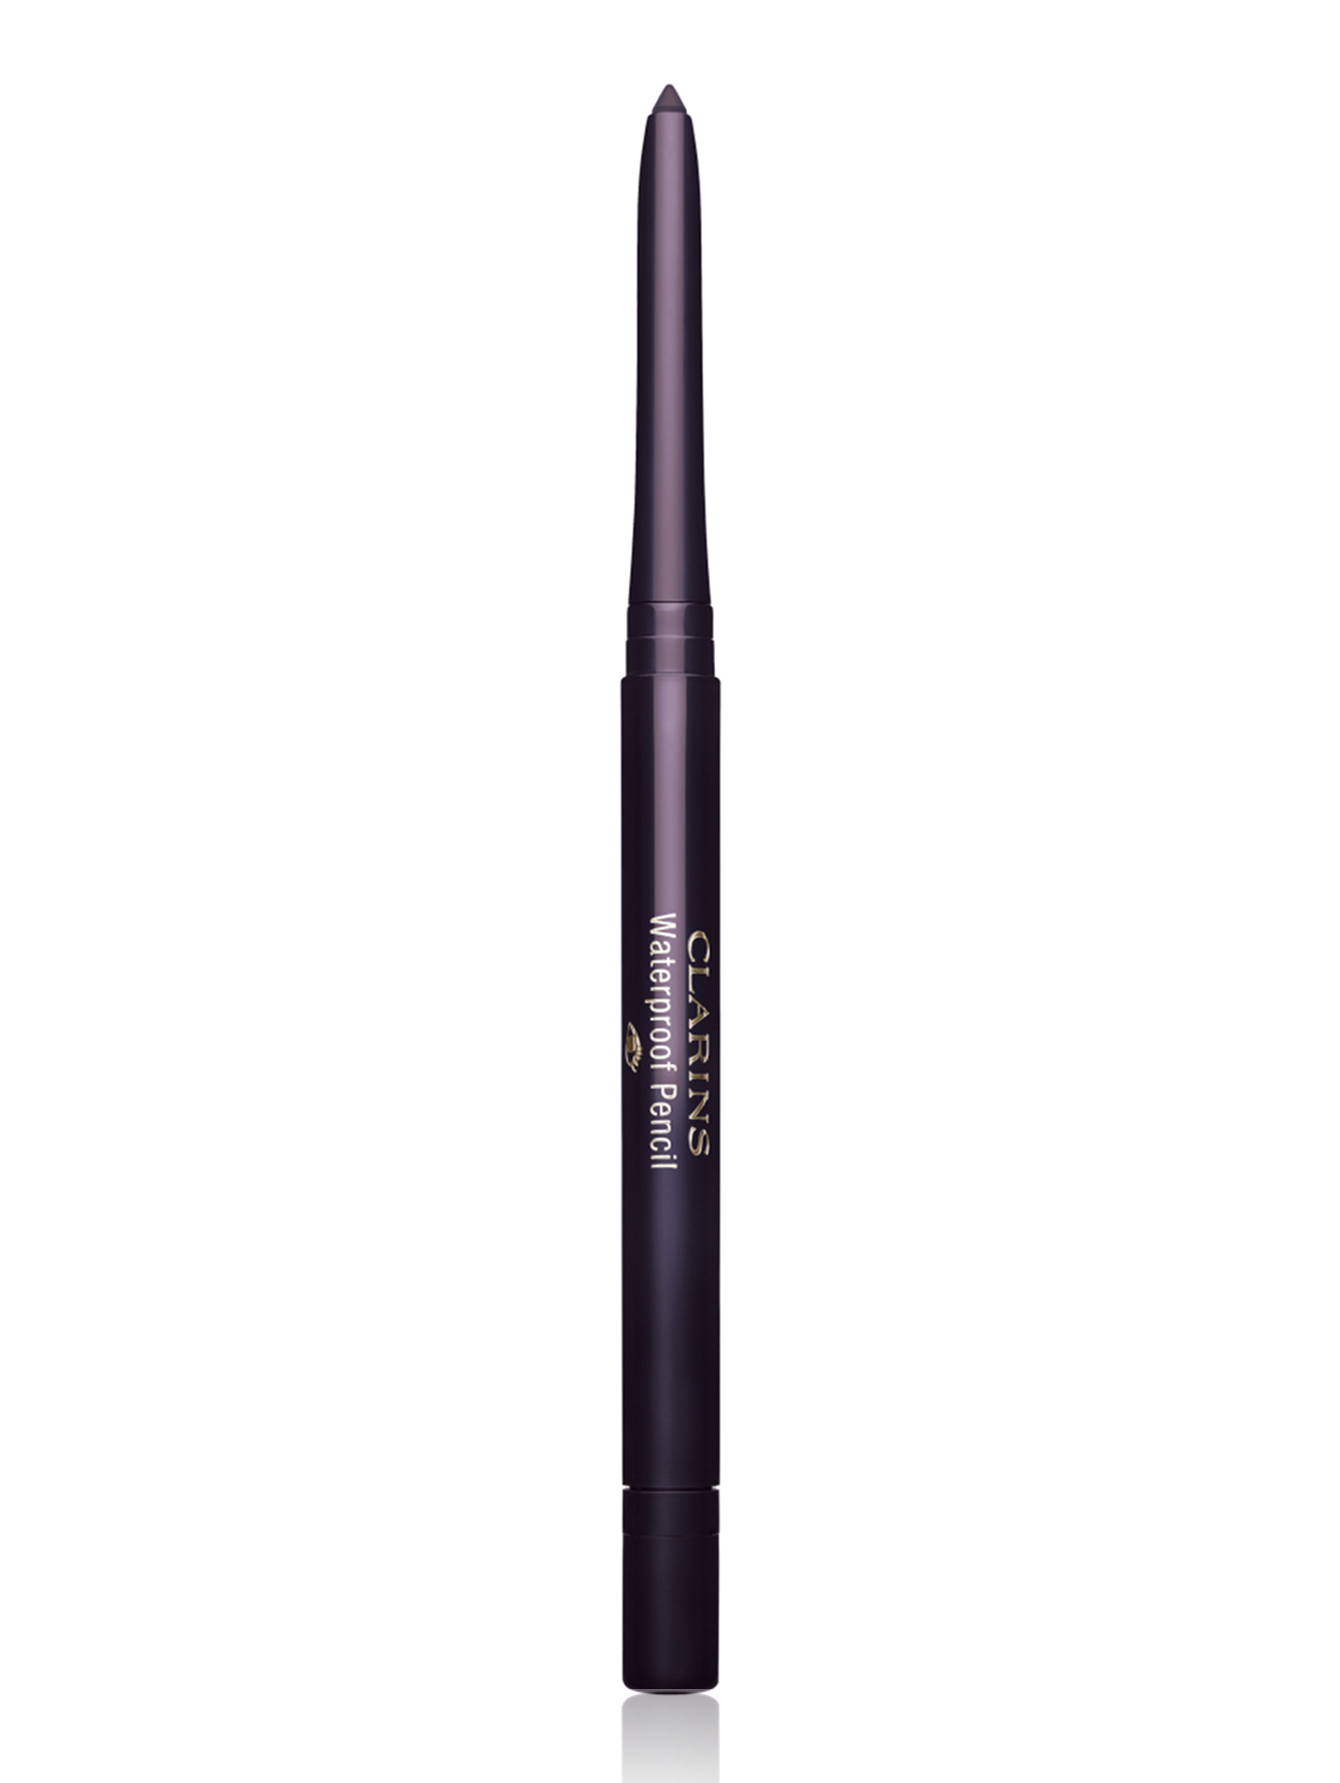 Карандаш для глаз Waterproof Pencil 04 Makeup - Общий вид